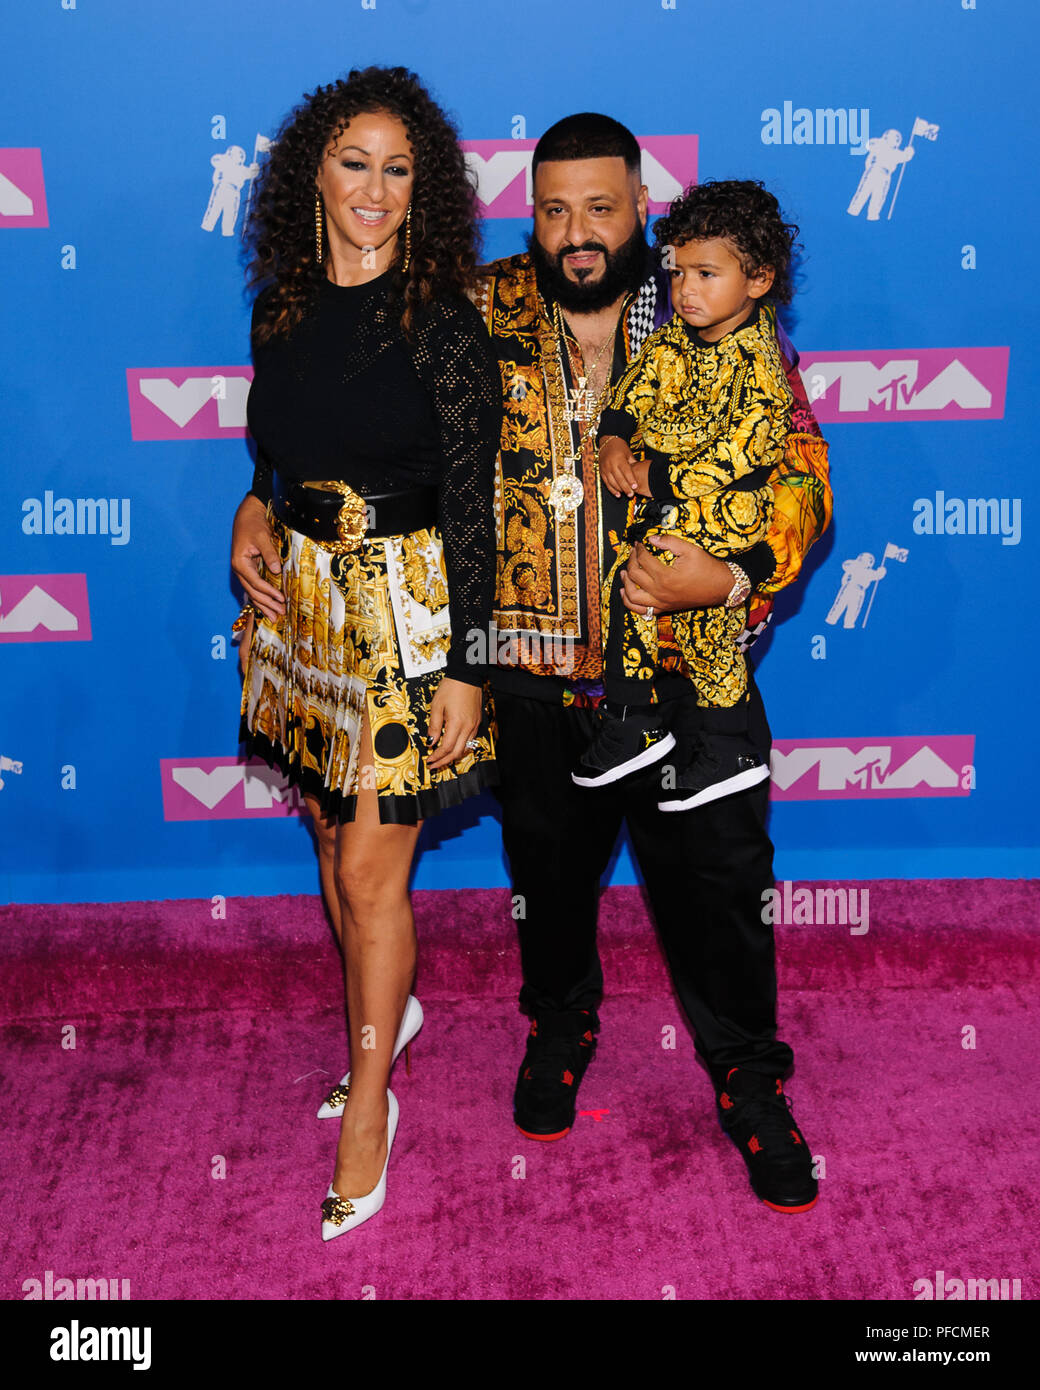 New York, New York, USA. 20th Aug, 2018. DJ Khaled and family at the 2018 MTV Video Music Awards at Radio City Music Hall. Credit: Mario Santoro/AdMedia/ZUMA Wire/Alamy Live News Stock Photo